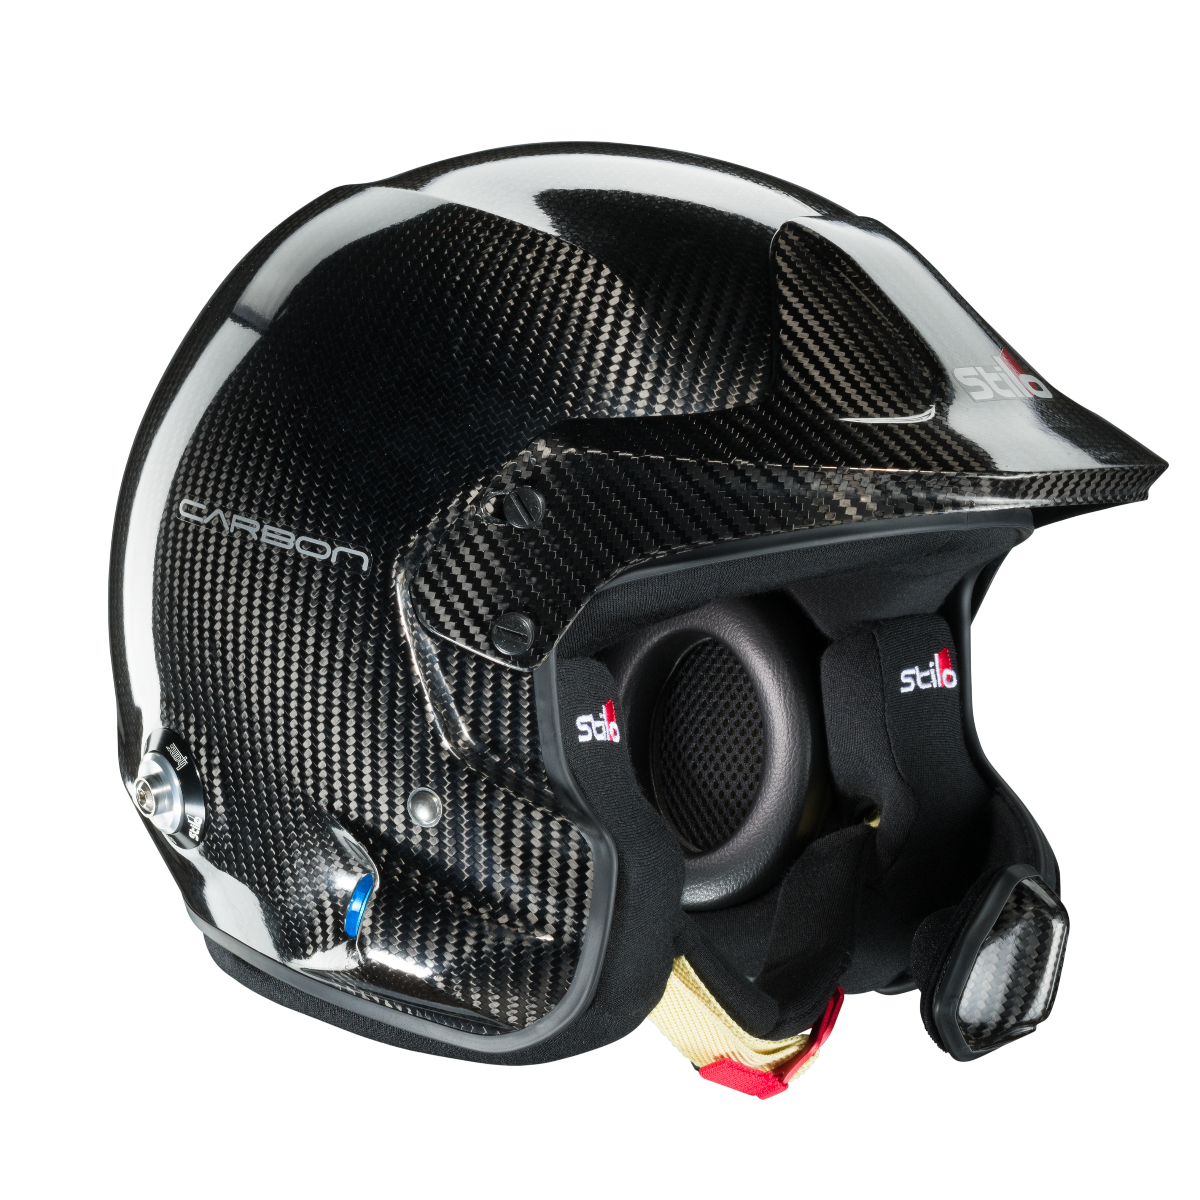 Stilo WRC Venti Carbon Rally Helmet